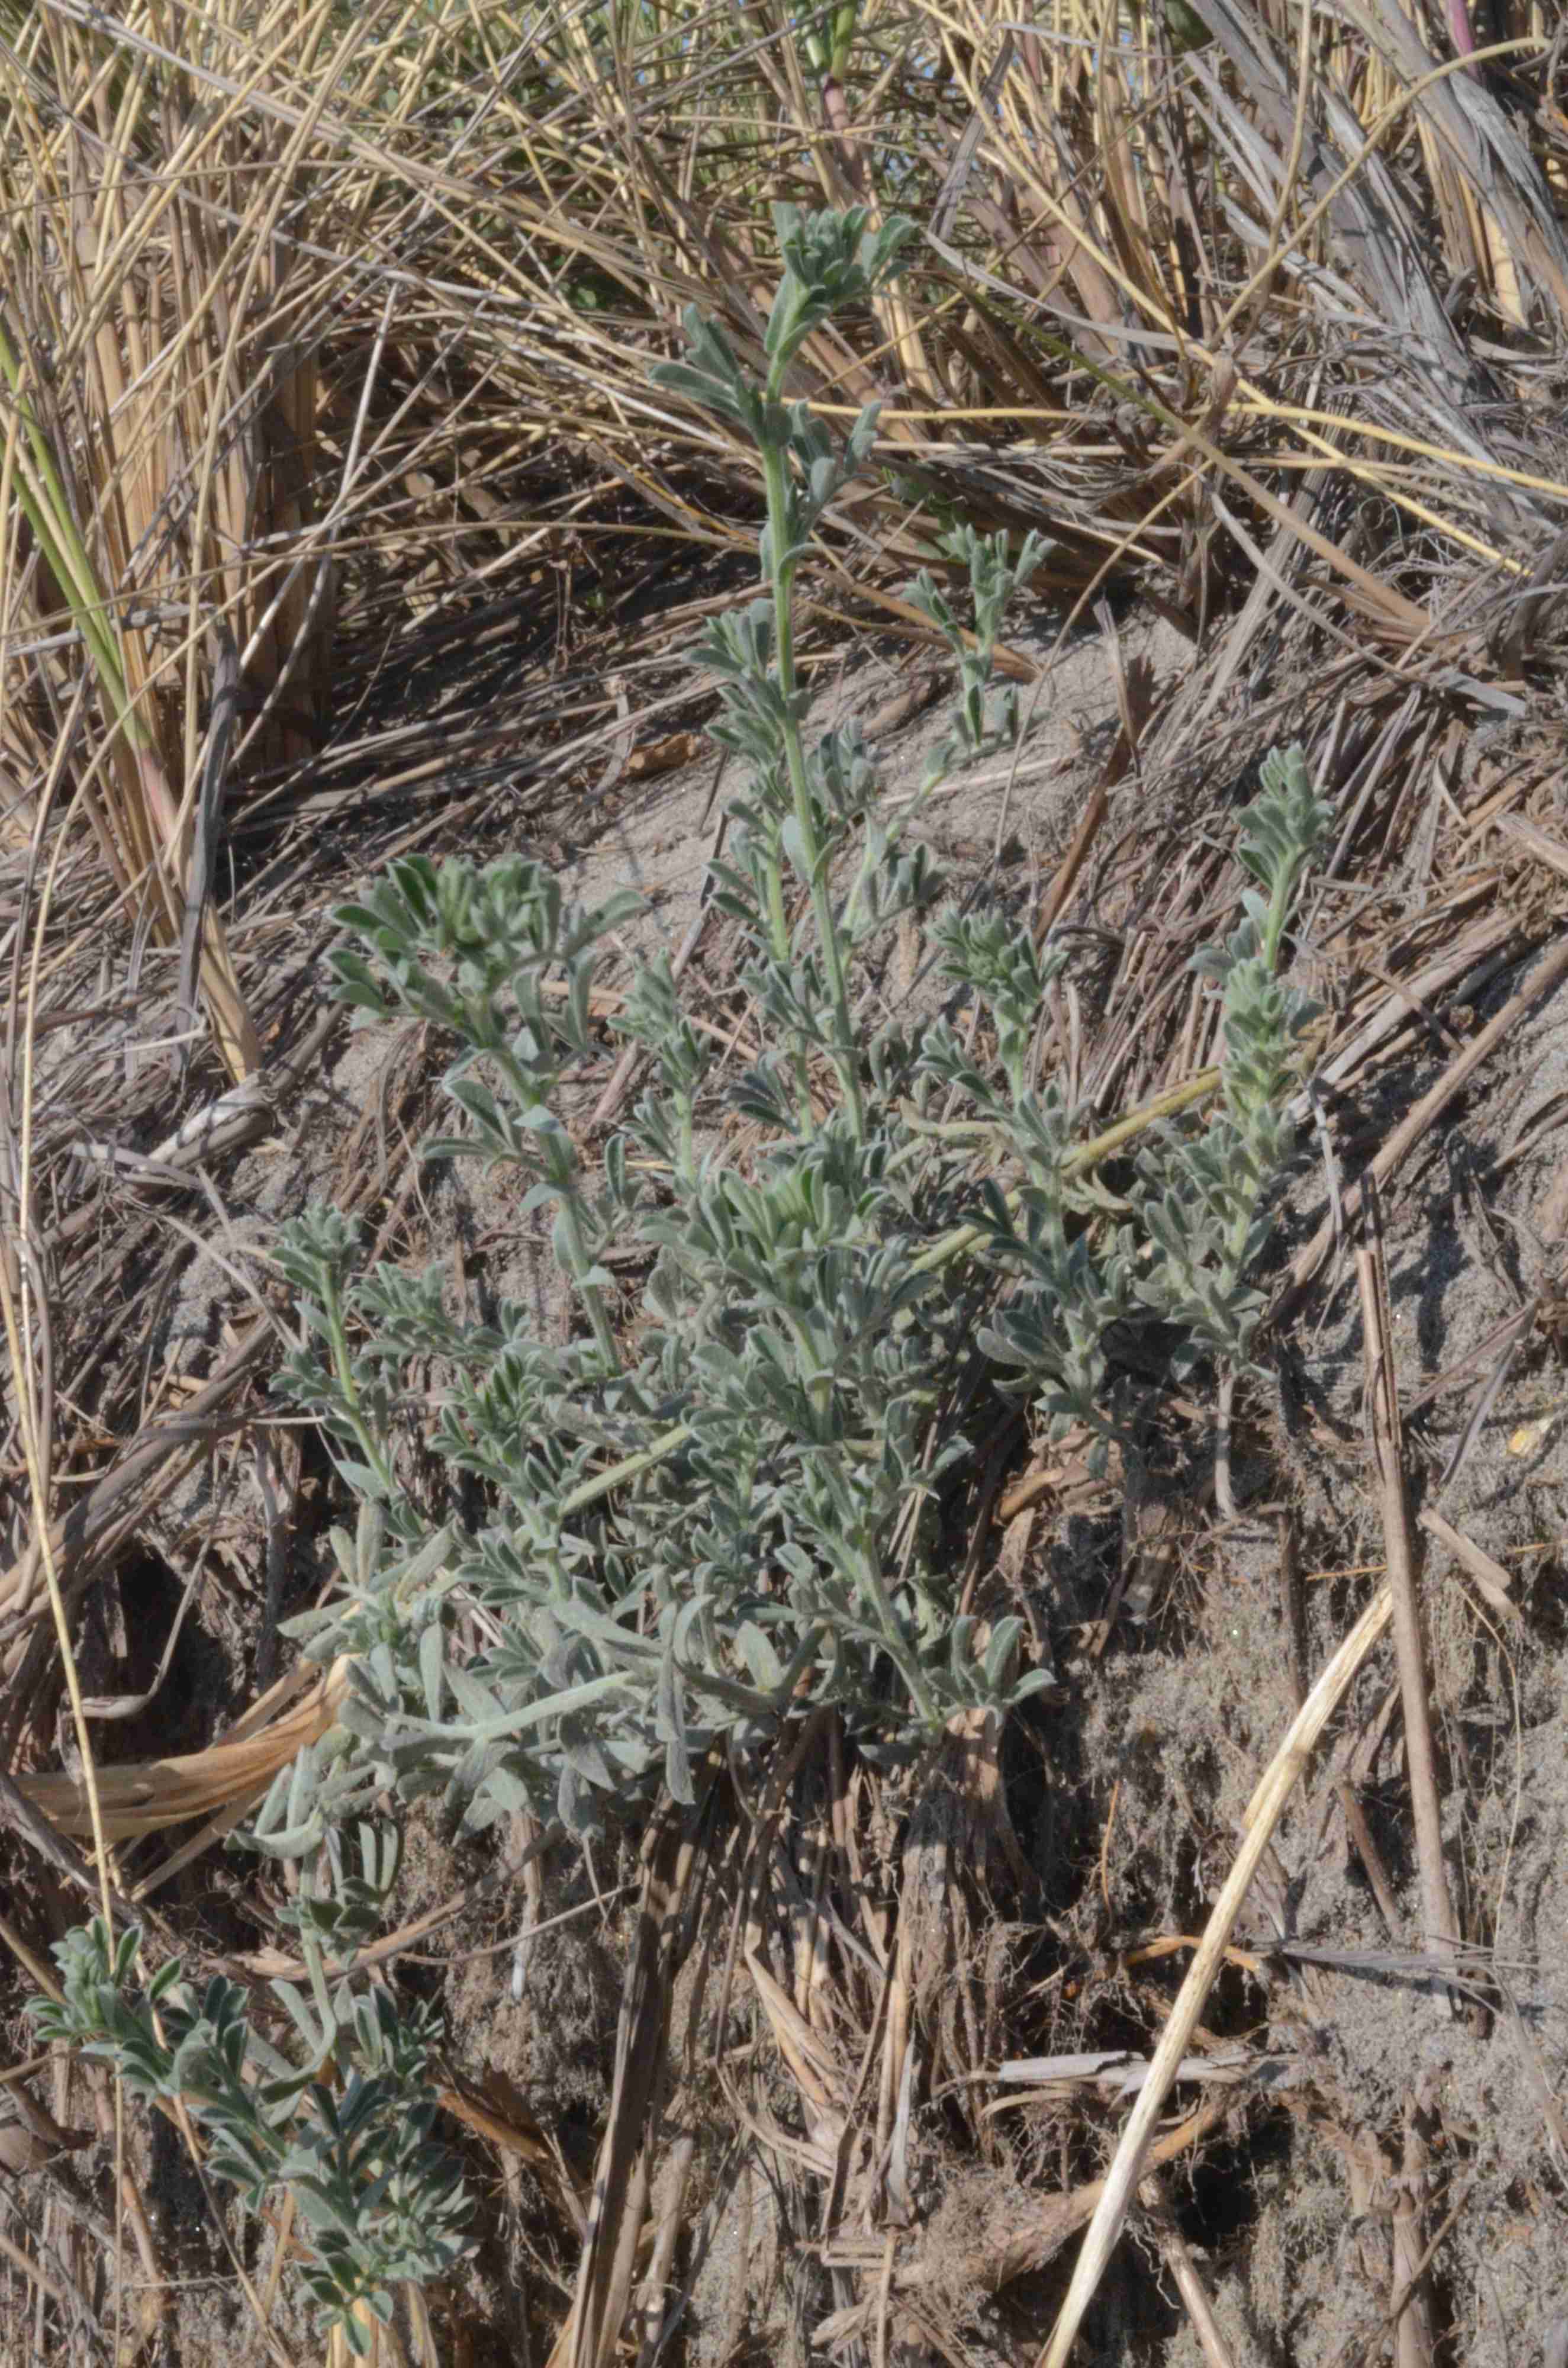 Lathyrus littoralis growing on the leeward slope of a coastal dune near Long Beach, Washington. 